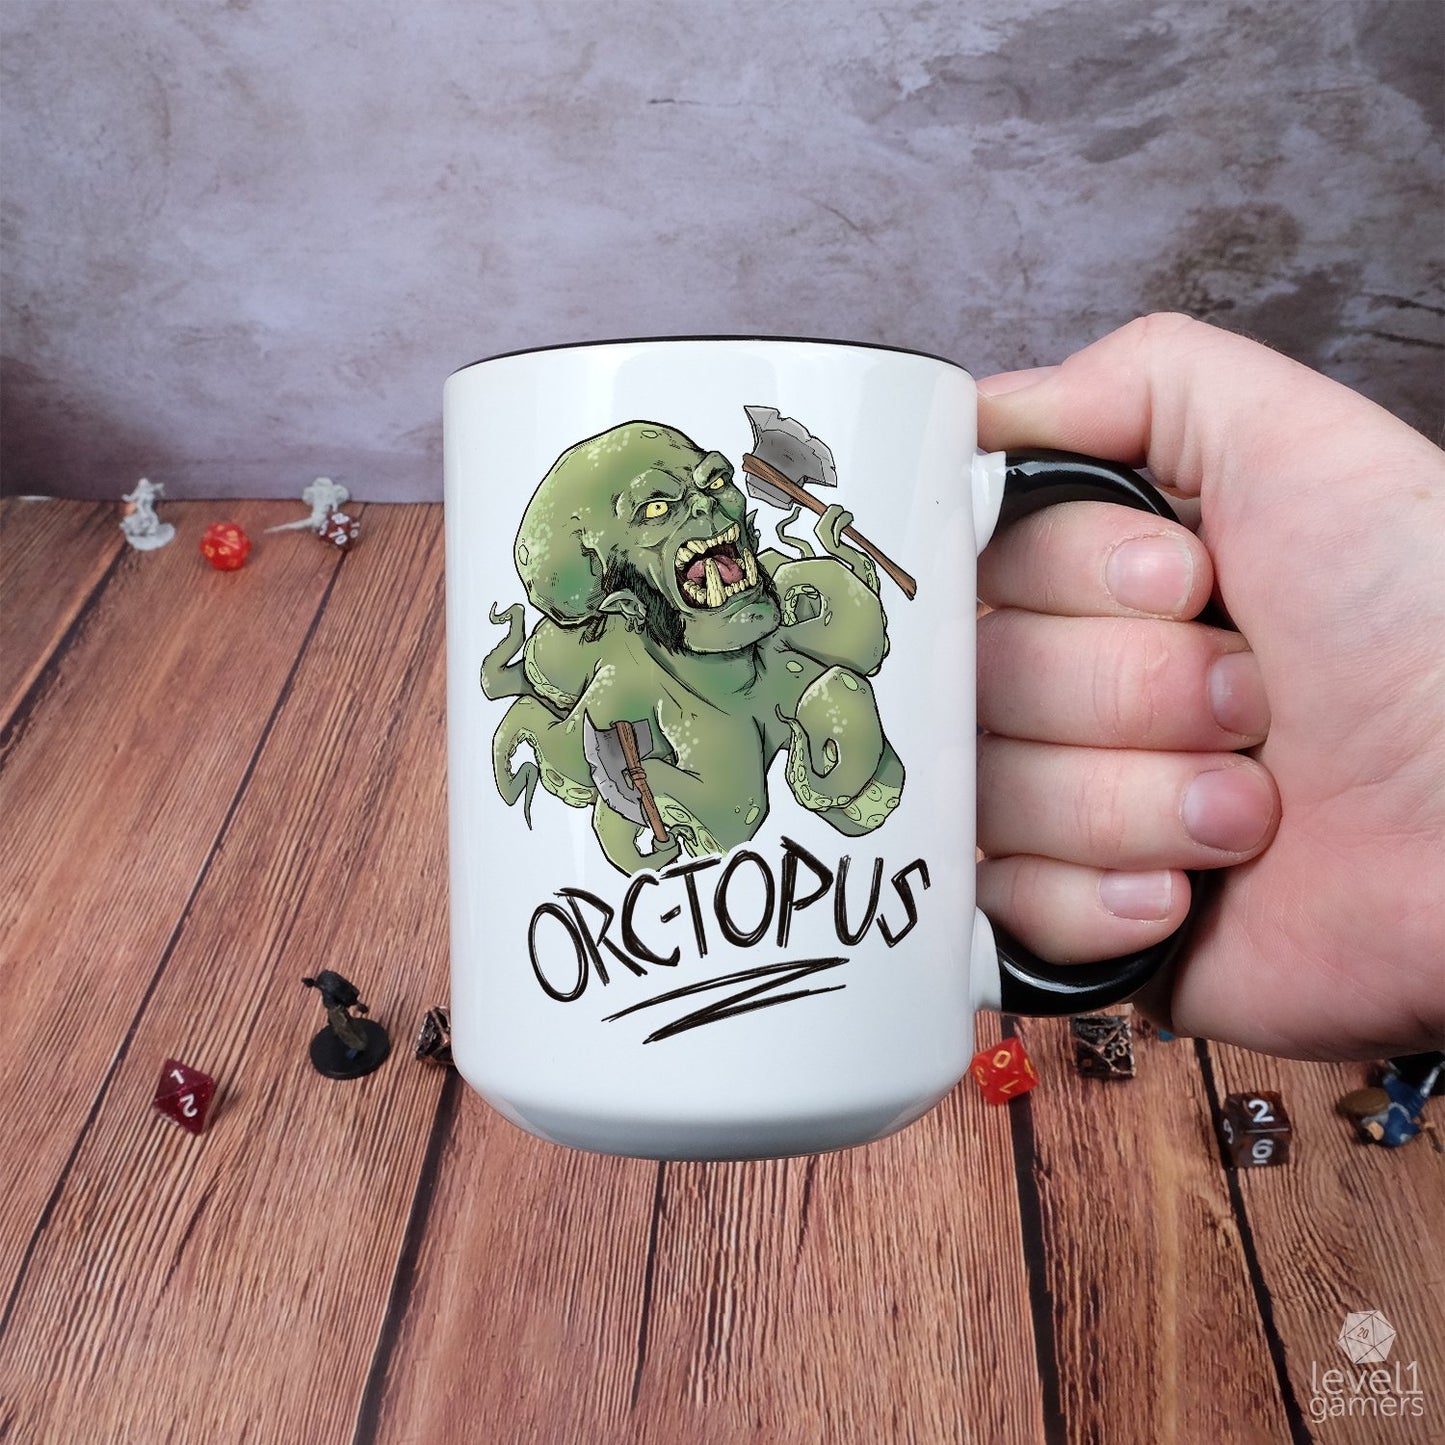 Orc-Topus Mug  Level 1 Gamers   